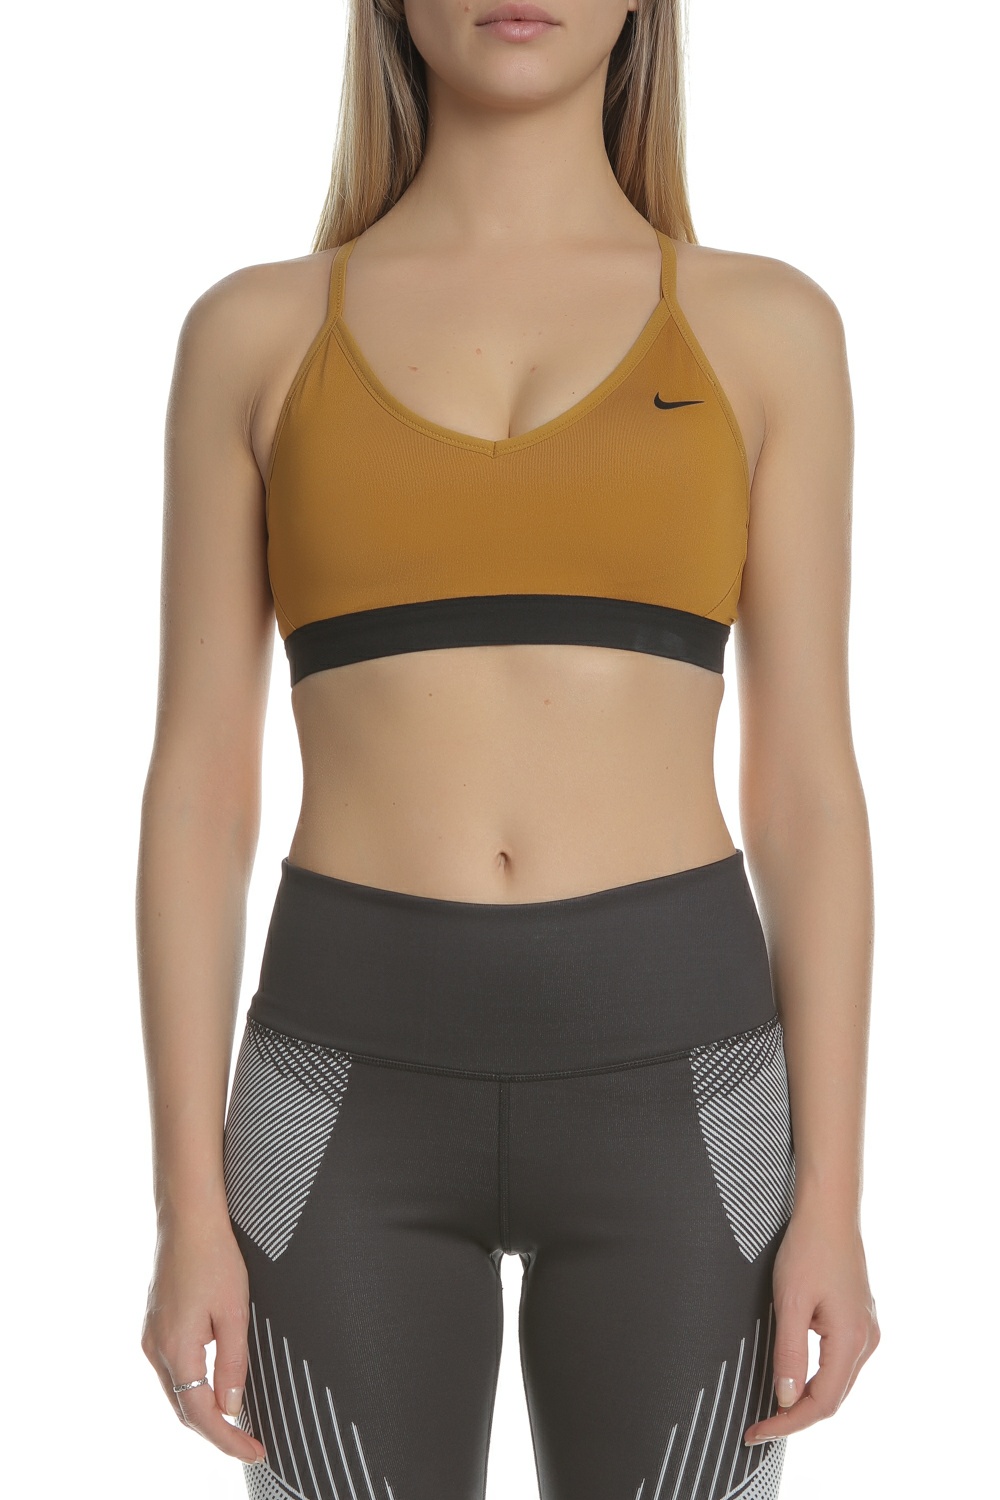 NIKE - Γυναικείο αθλητικό μπουστάκι Nike Pro Indy μπεζ Γυναικεία/Ρούχα/Αθλητικά/Μπουστάκια